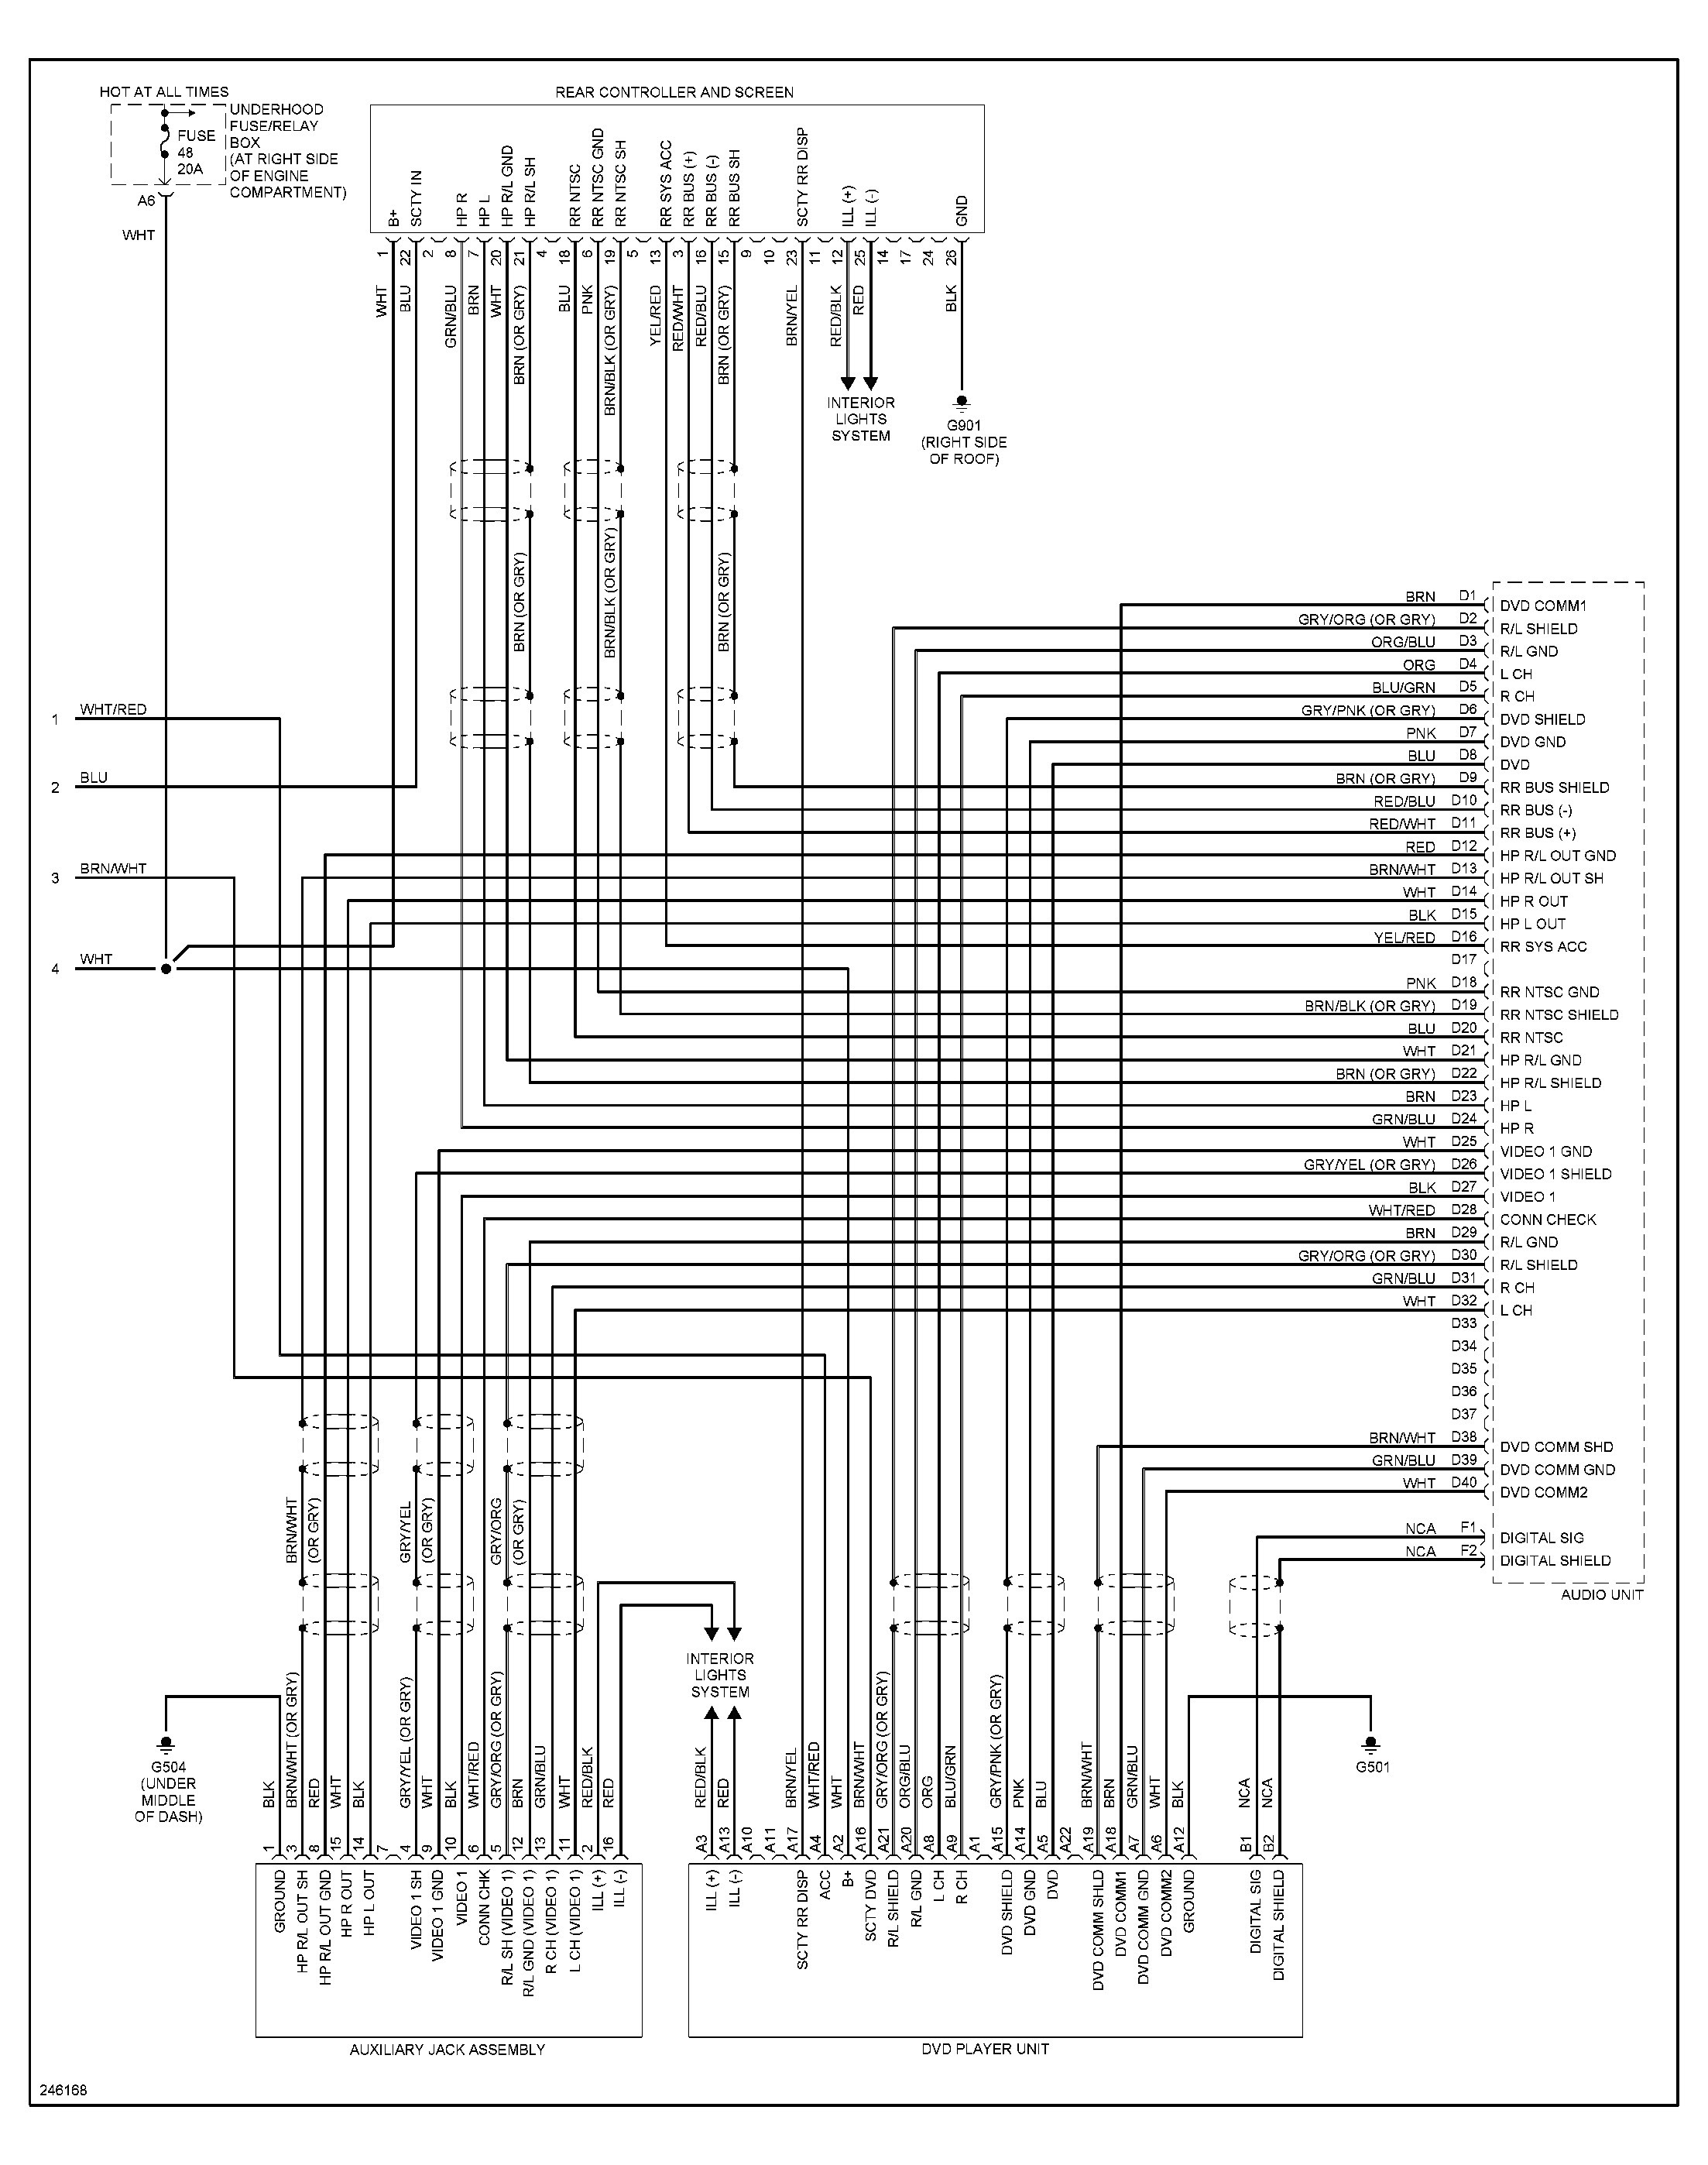 Wiring Diagram Honda Odyssey 2006 - Wiring Diagram Schemas